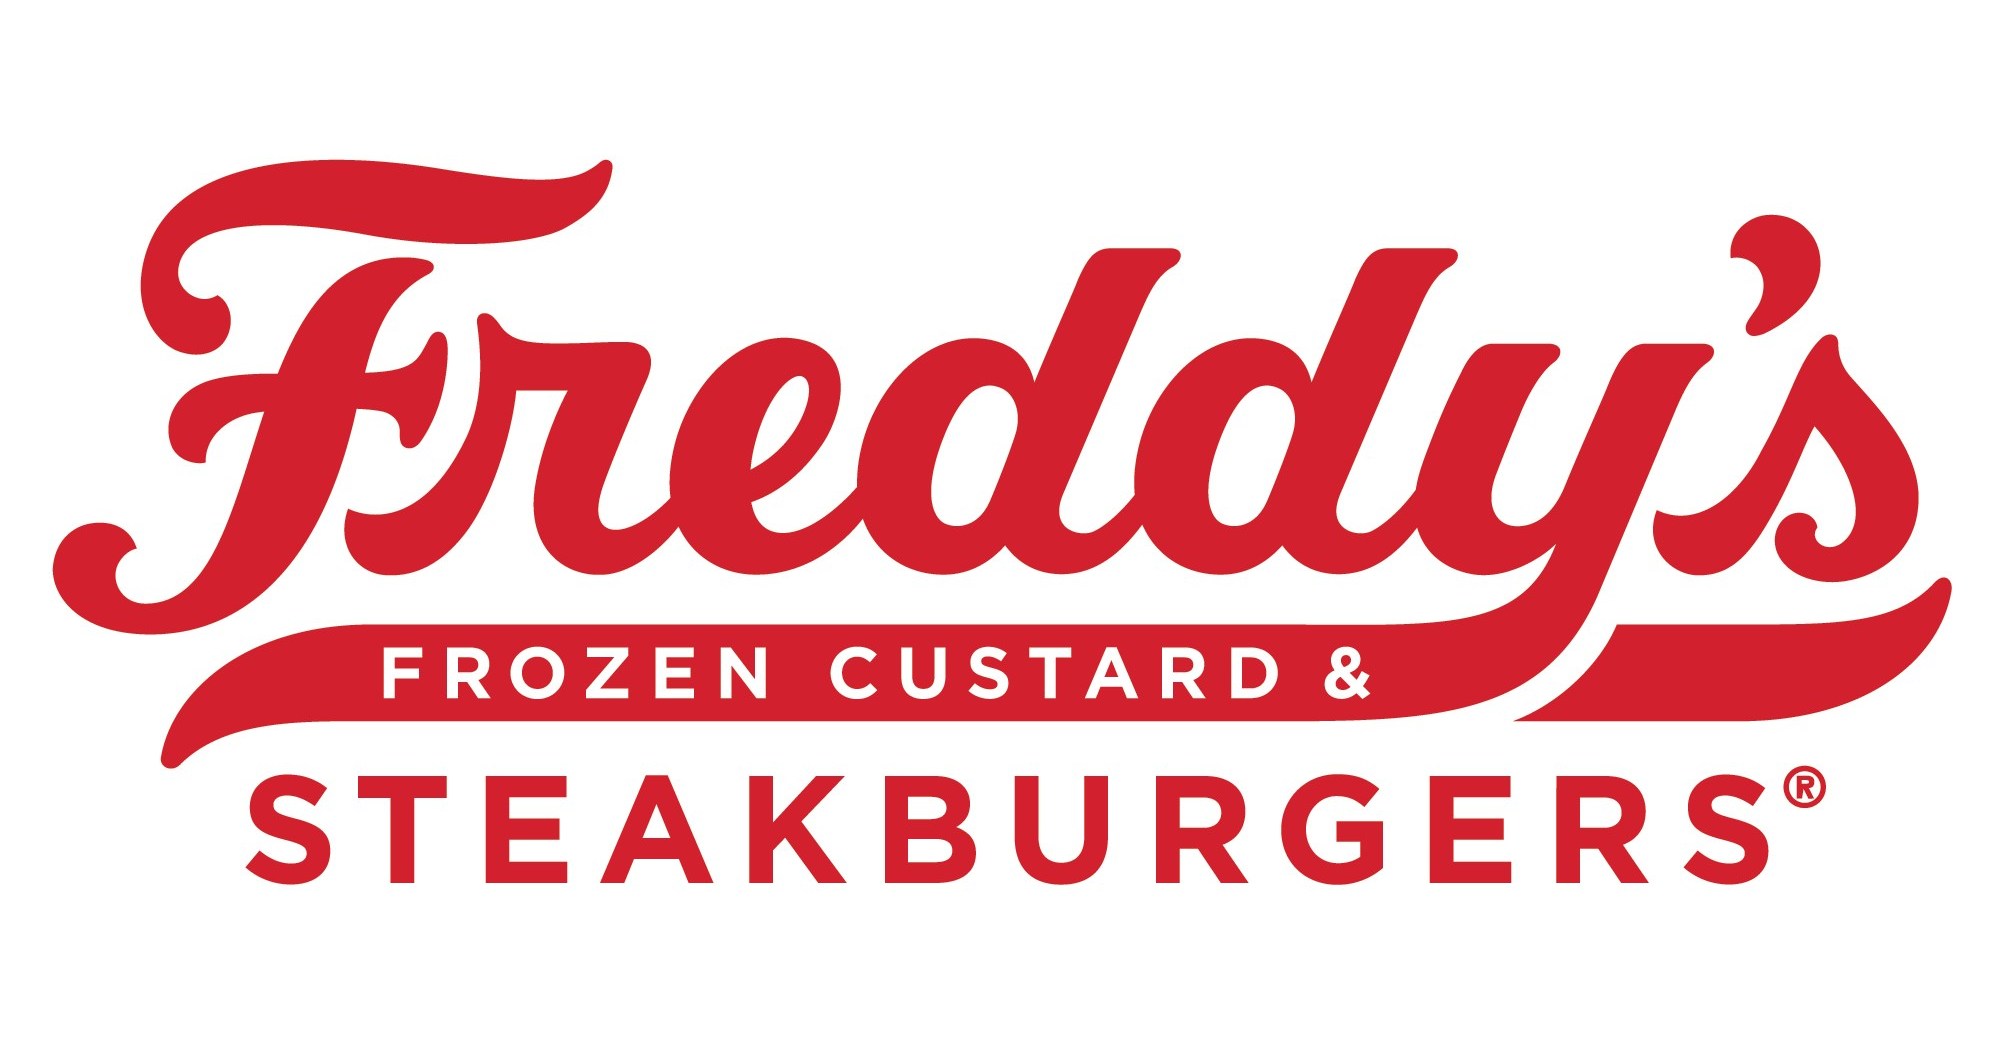 Freddy S Frozen Custard Steakburgers Enters Nontraditional Space